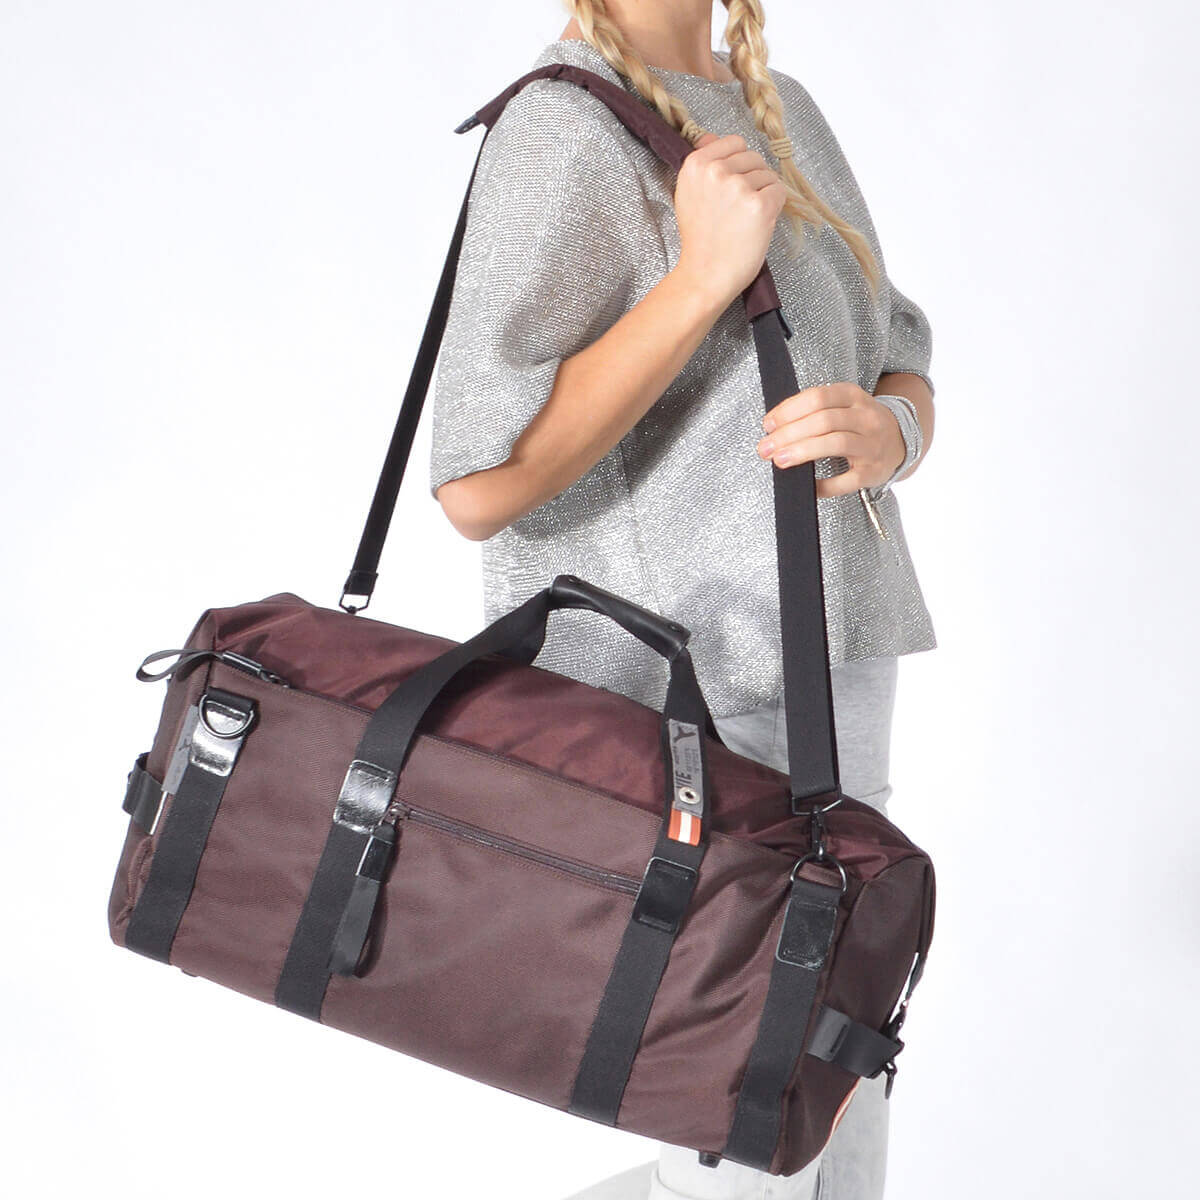 Gym bag weekender SALE item, with shoulder handles & backpack function - duffle bag SALE